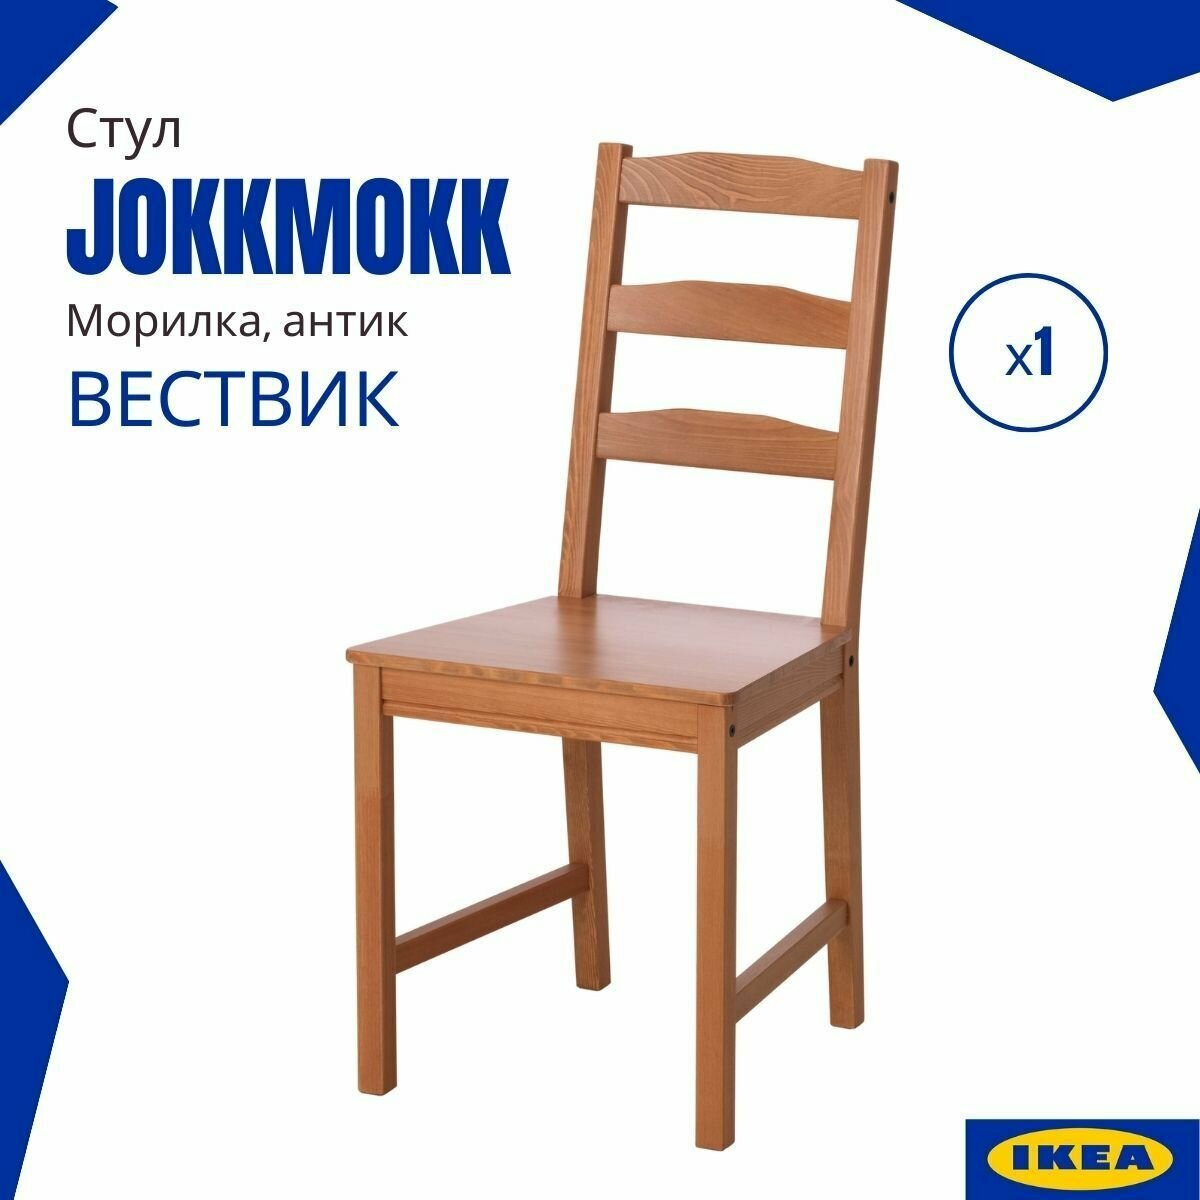 Стул Йокмокк икеа (JOKKMOKK IKEA) / Вествик. Обеденный стул на кухню, морилка, 1 шт.